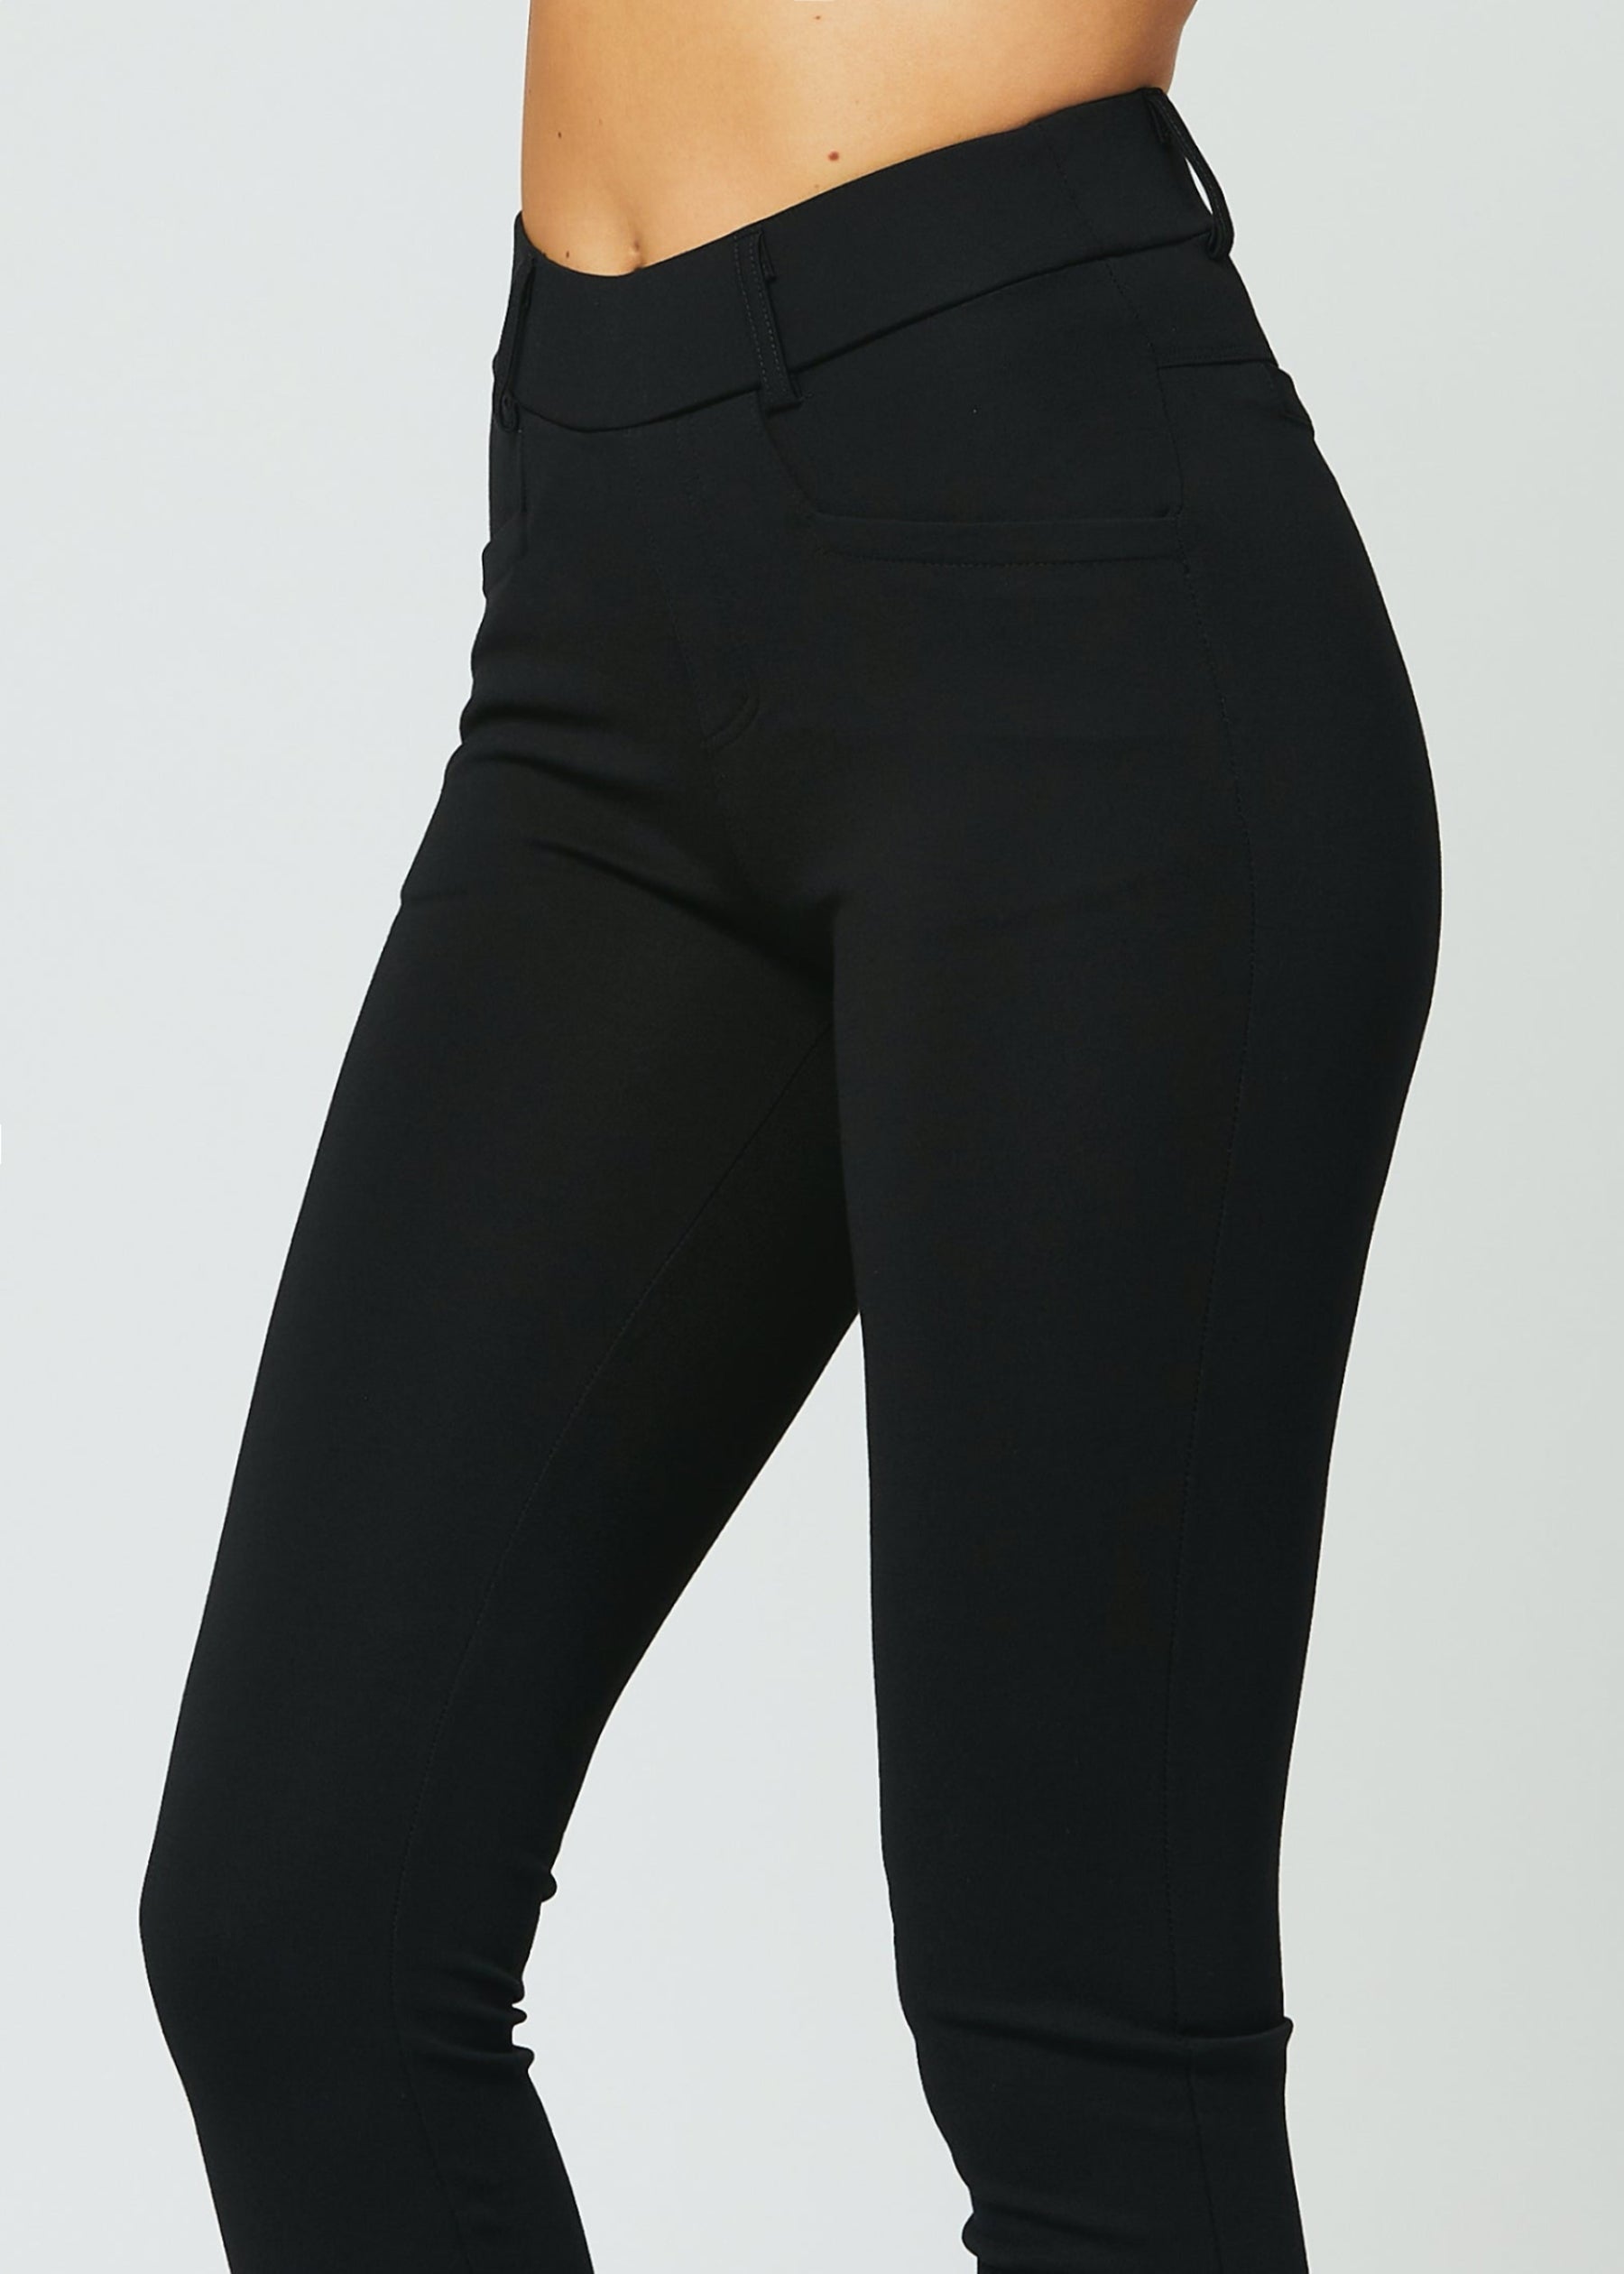 Buy Diaz Women's Regular Fit Plain 3/4th Capri Pants (Black, Maroon,3XL) at